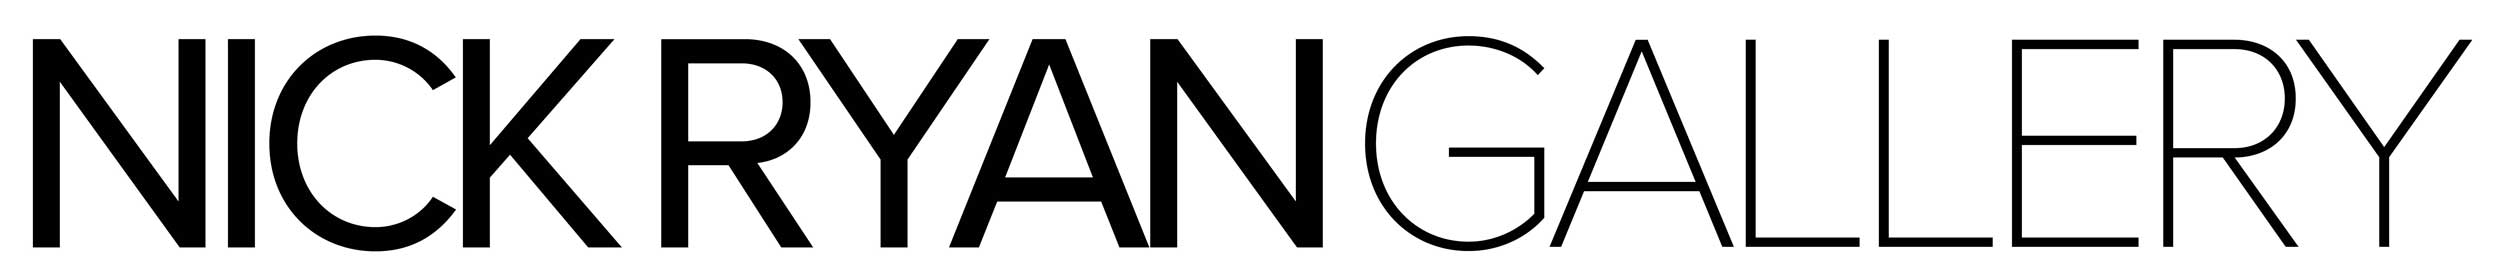 NICK RYAN GALLERY company logo